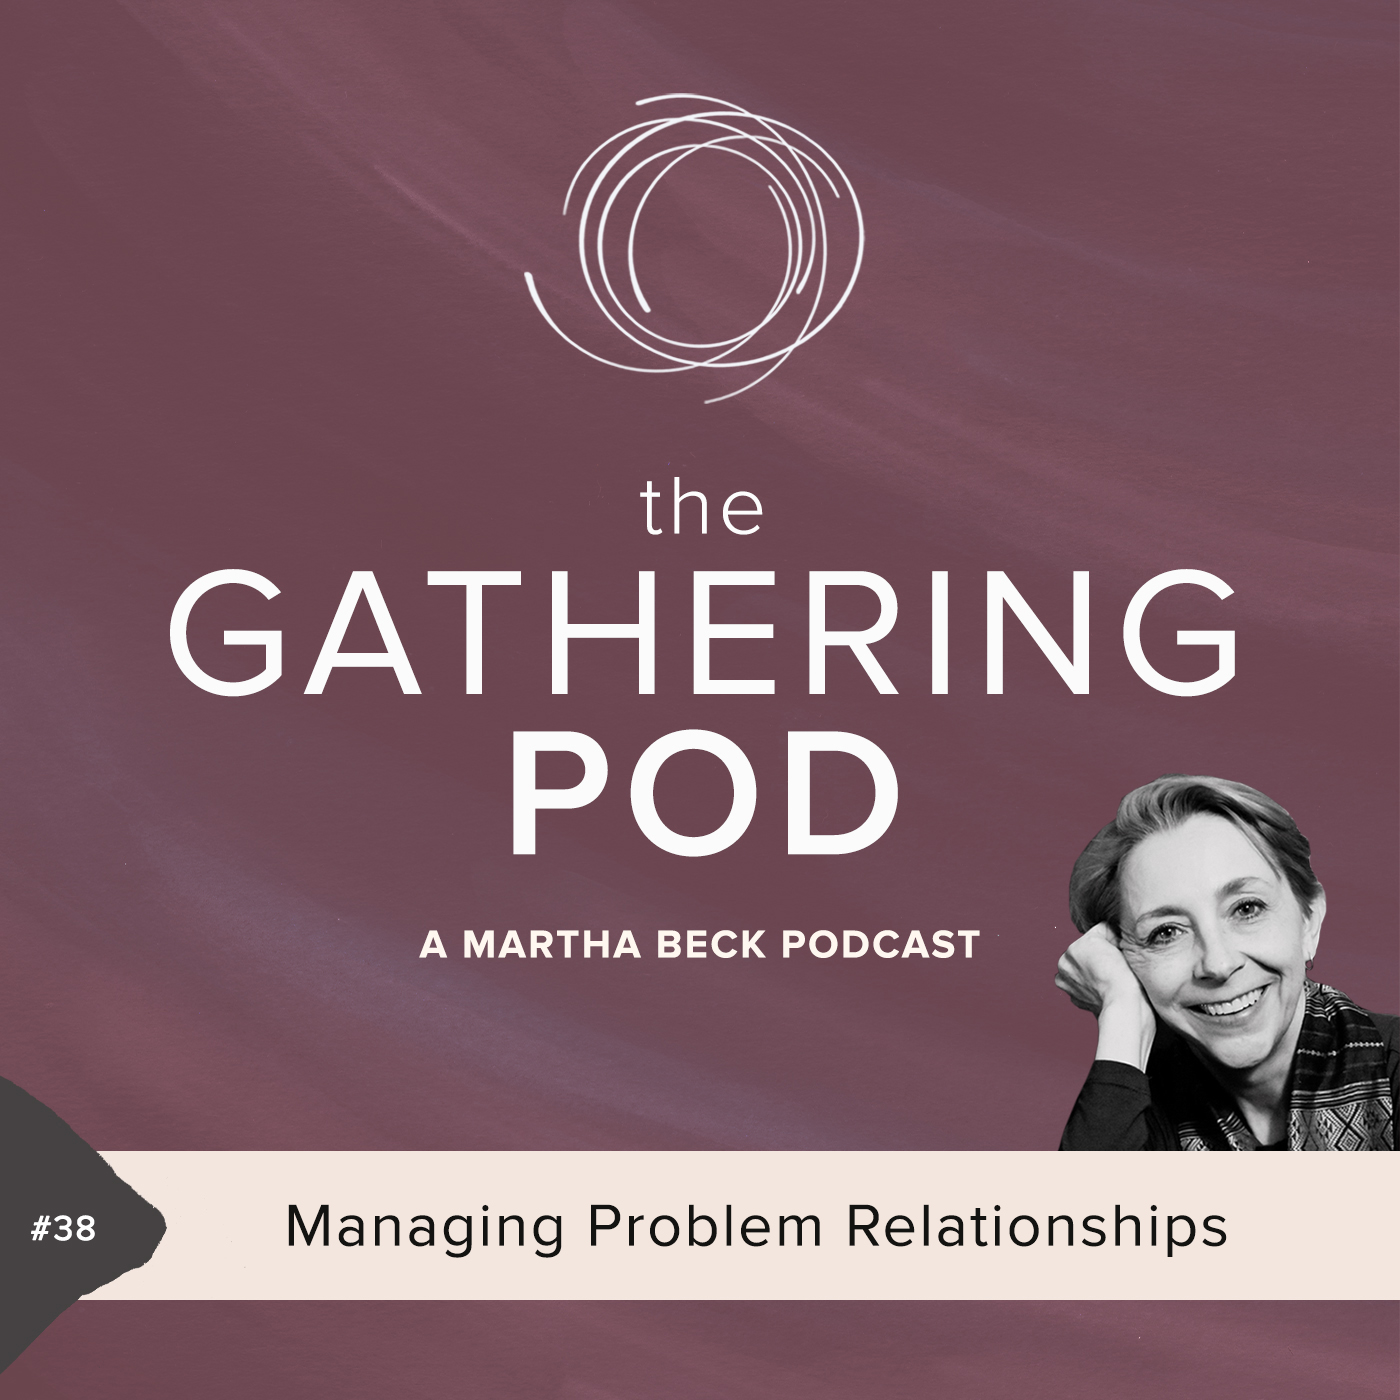 Image for The Gathering Pod A Martha Beck Podcast Episode #38 Managing Problem Relationships